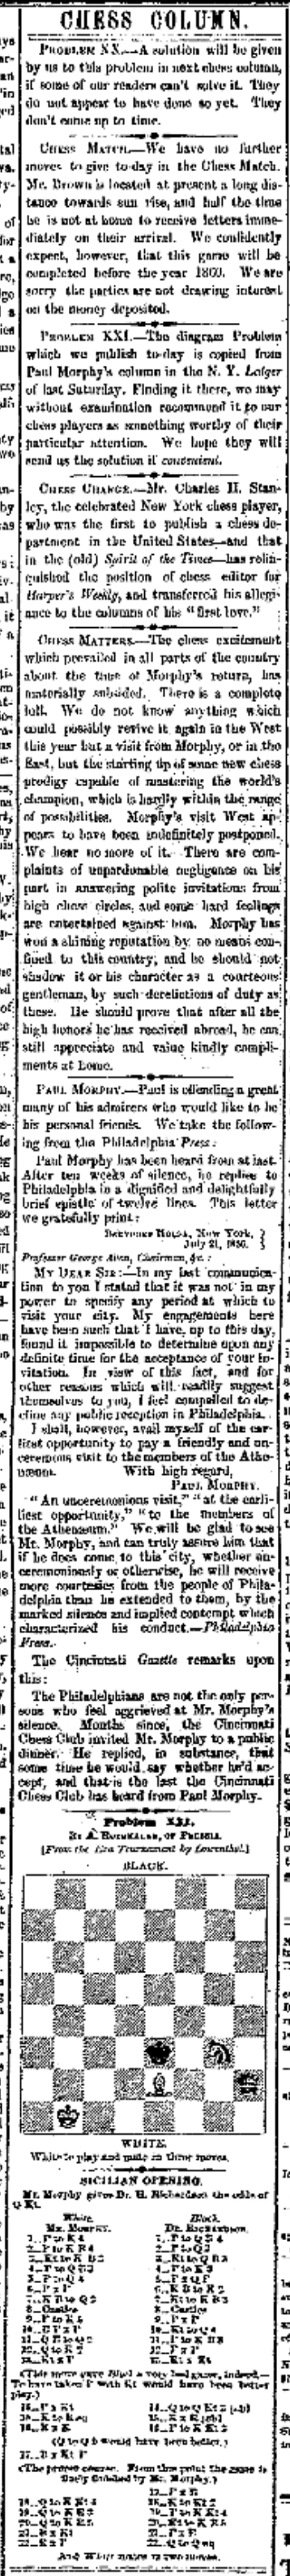 1859.08.08-01 Davenport Daily Gazette.png